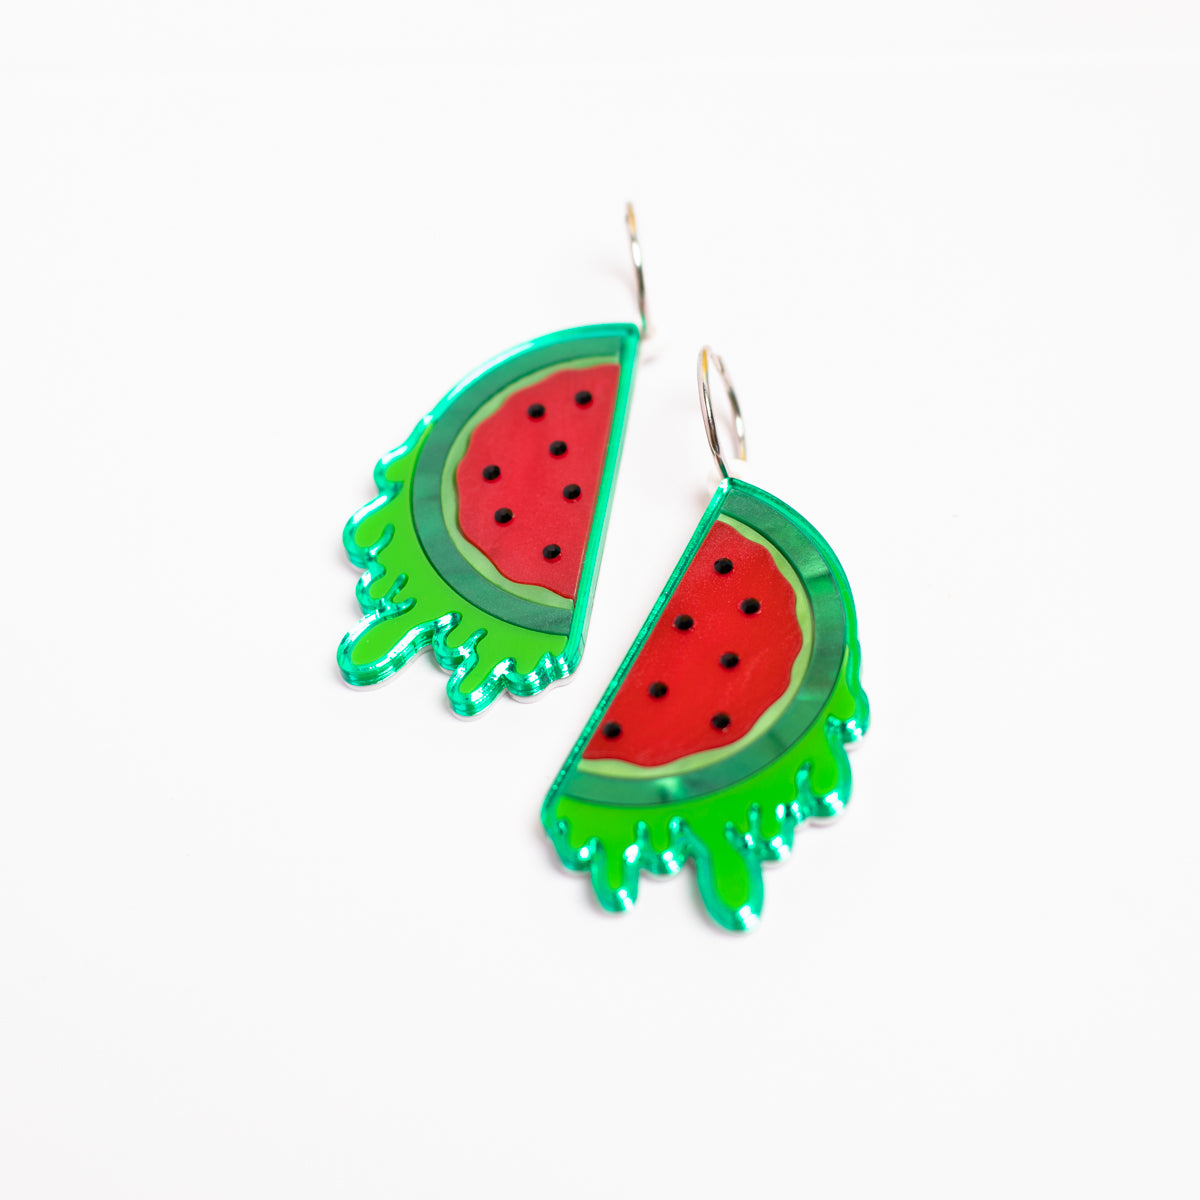 The Fruity Mix & Match Earrings